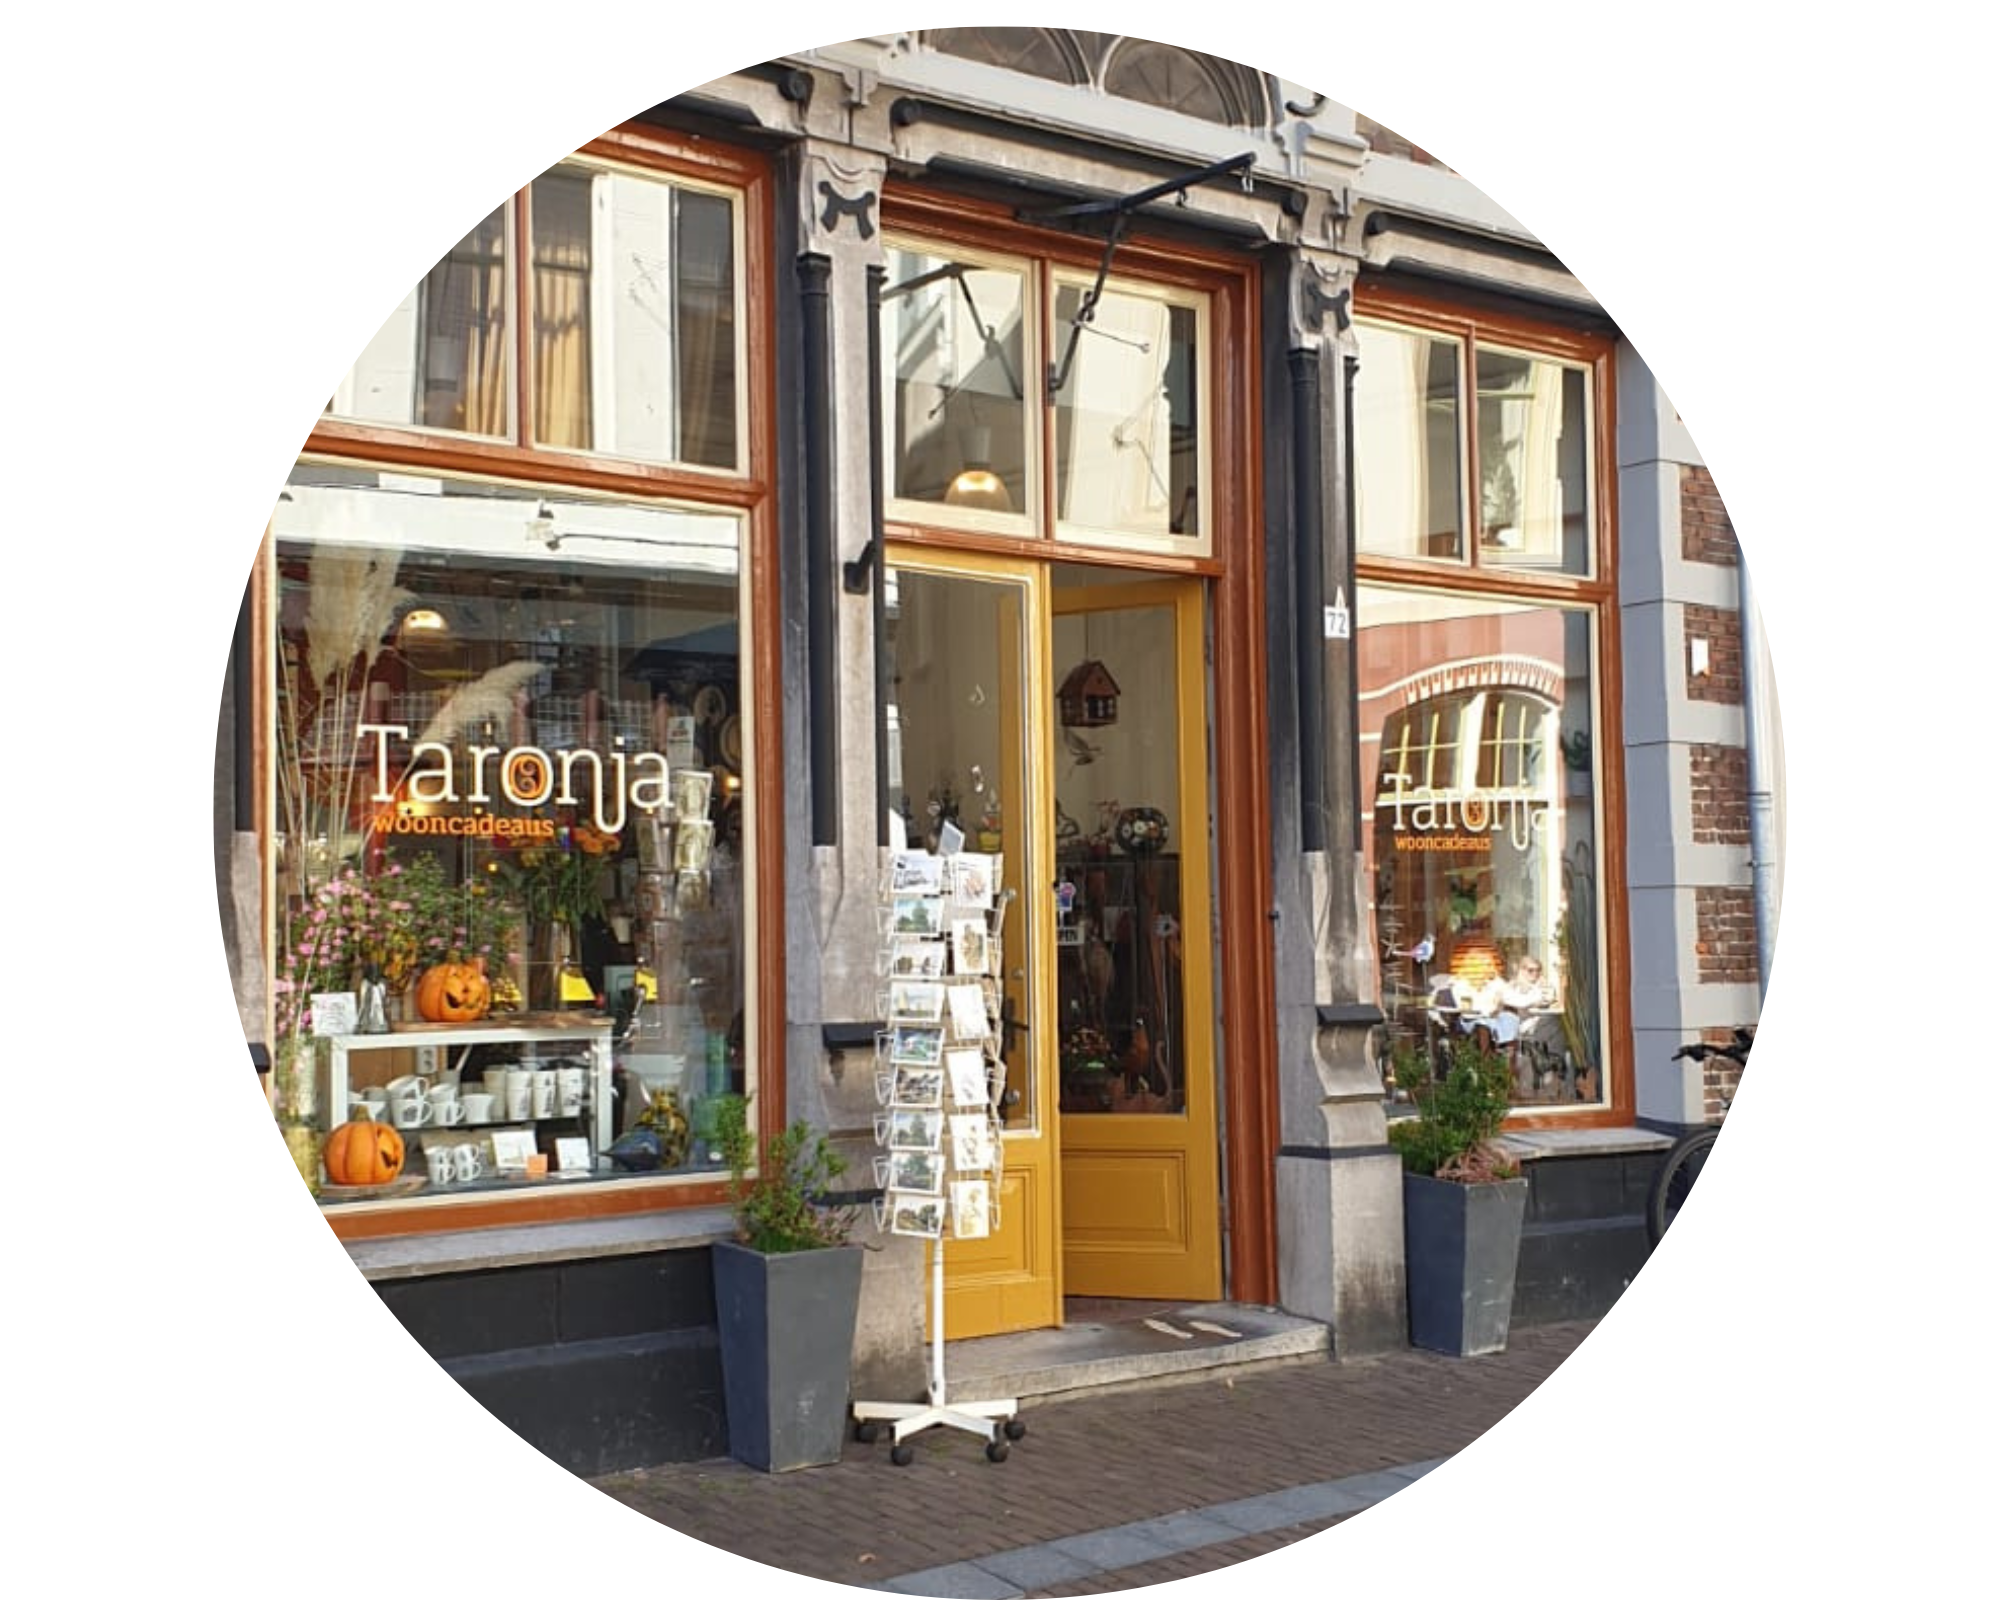 7x winkels in Zwolle die je zullen verrassen